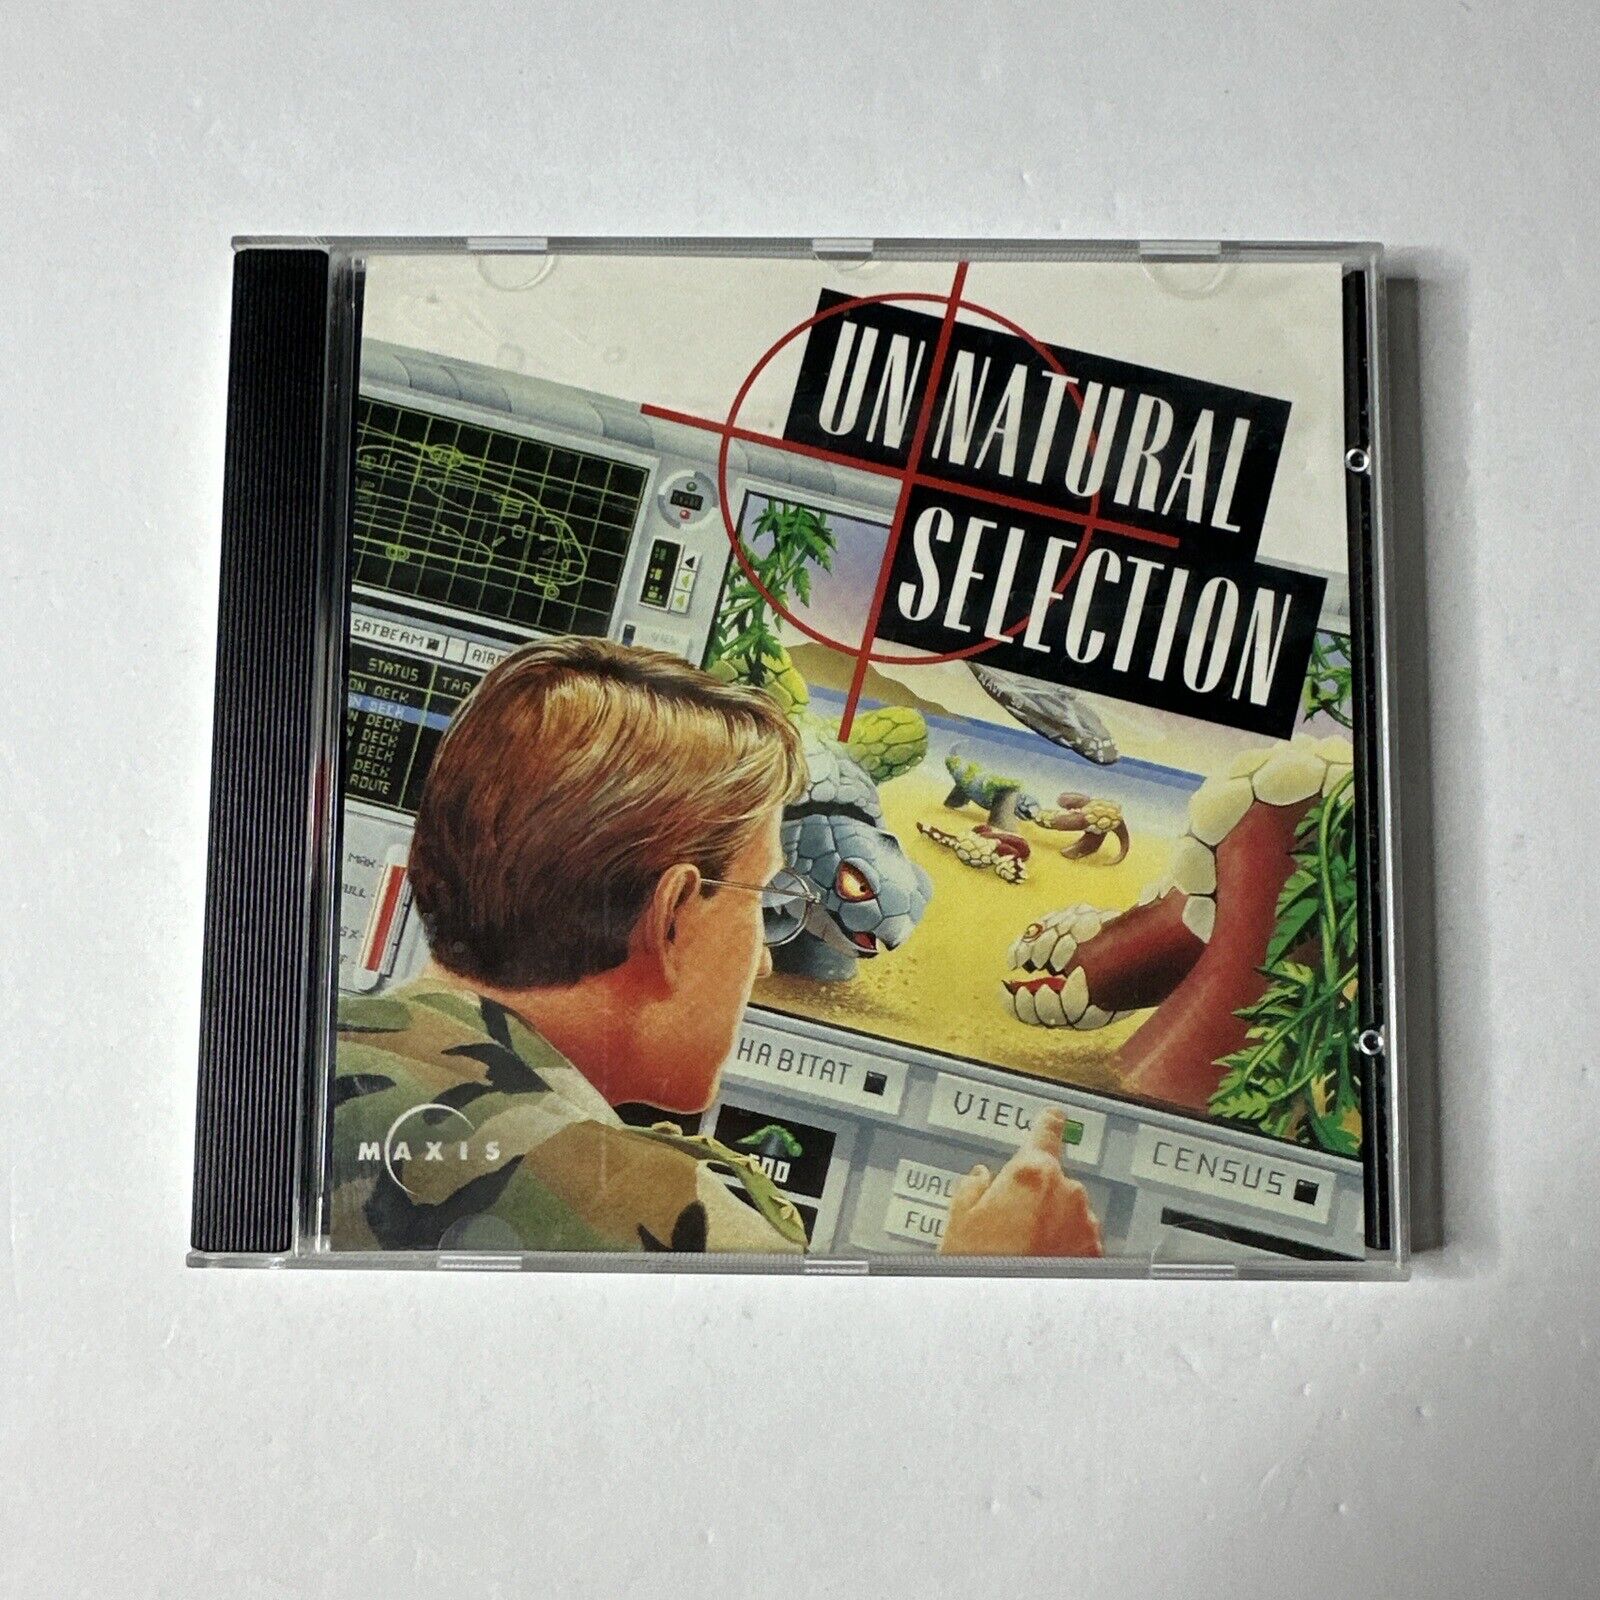 Unnatural Selection PC CD Rare PC Vintage Game